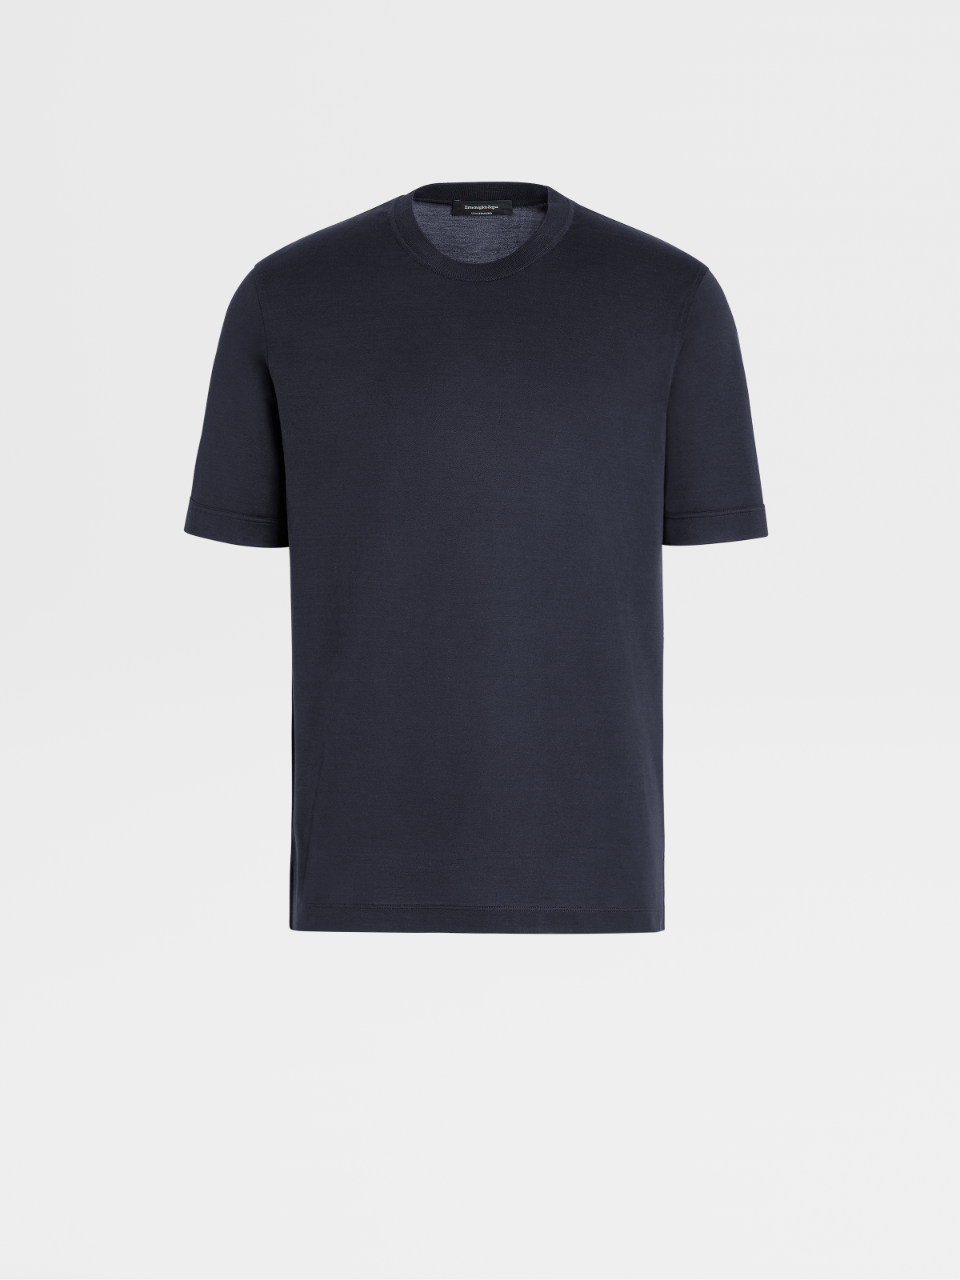 Leggerissimo Silk and Cotton Short-sleeve T-shirt